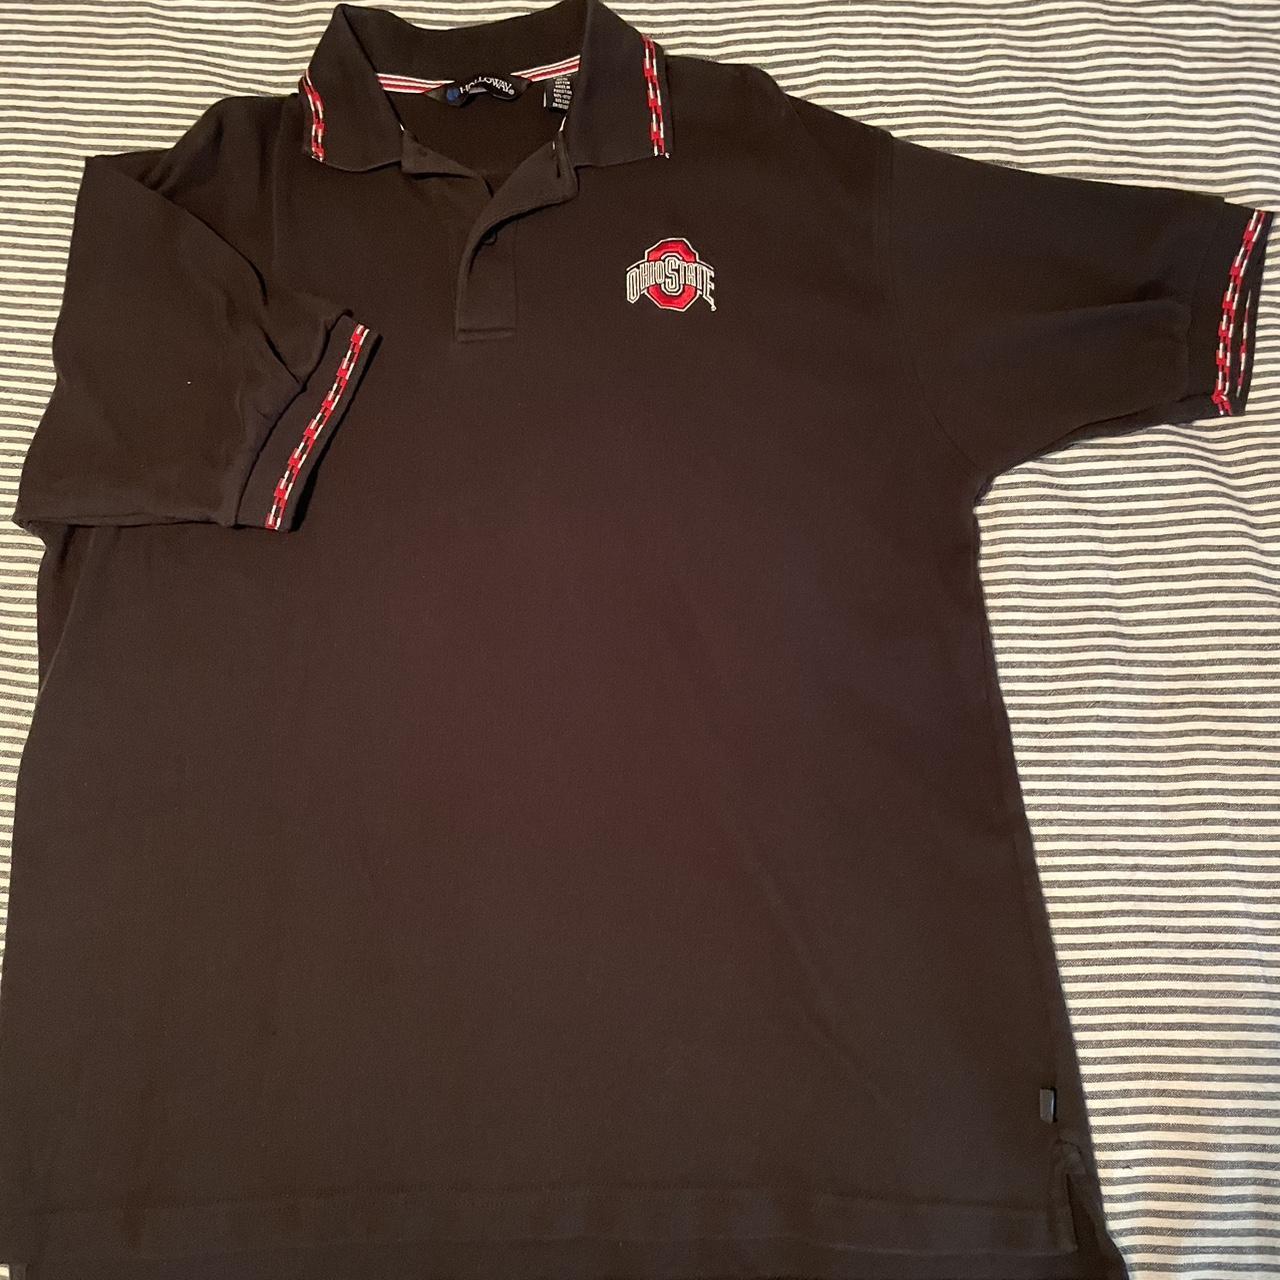 Vintage Ohio state polo shirt no flaws size M. Super... - Depop